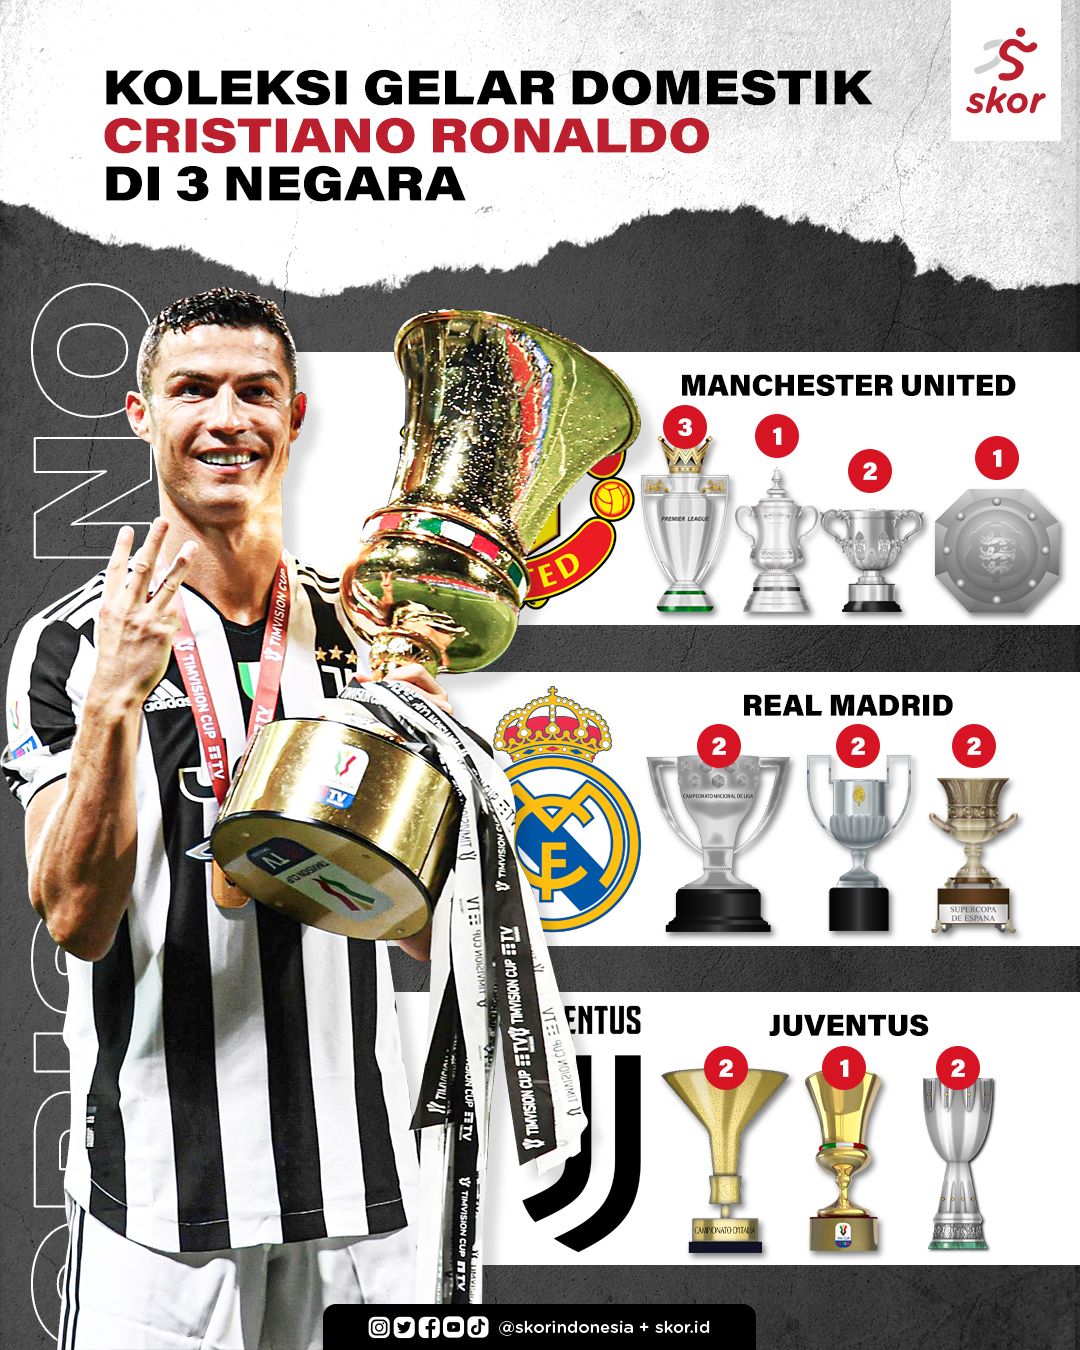 Koleksi Gelar Domestik Cristiano Ronaldo di 3 Negara